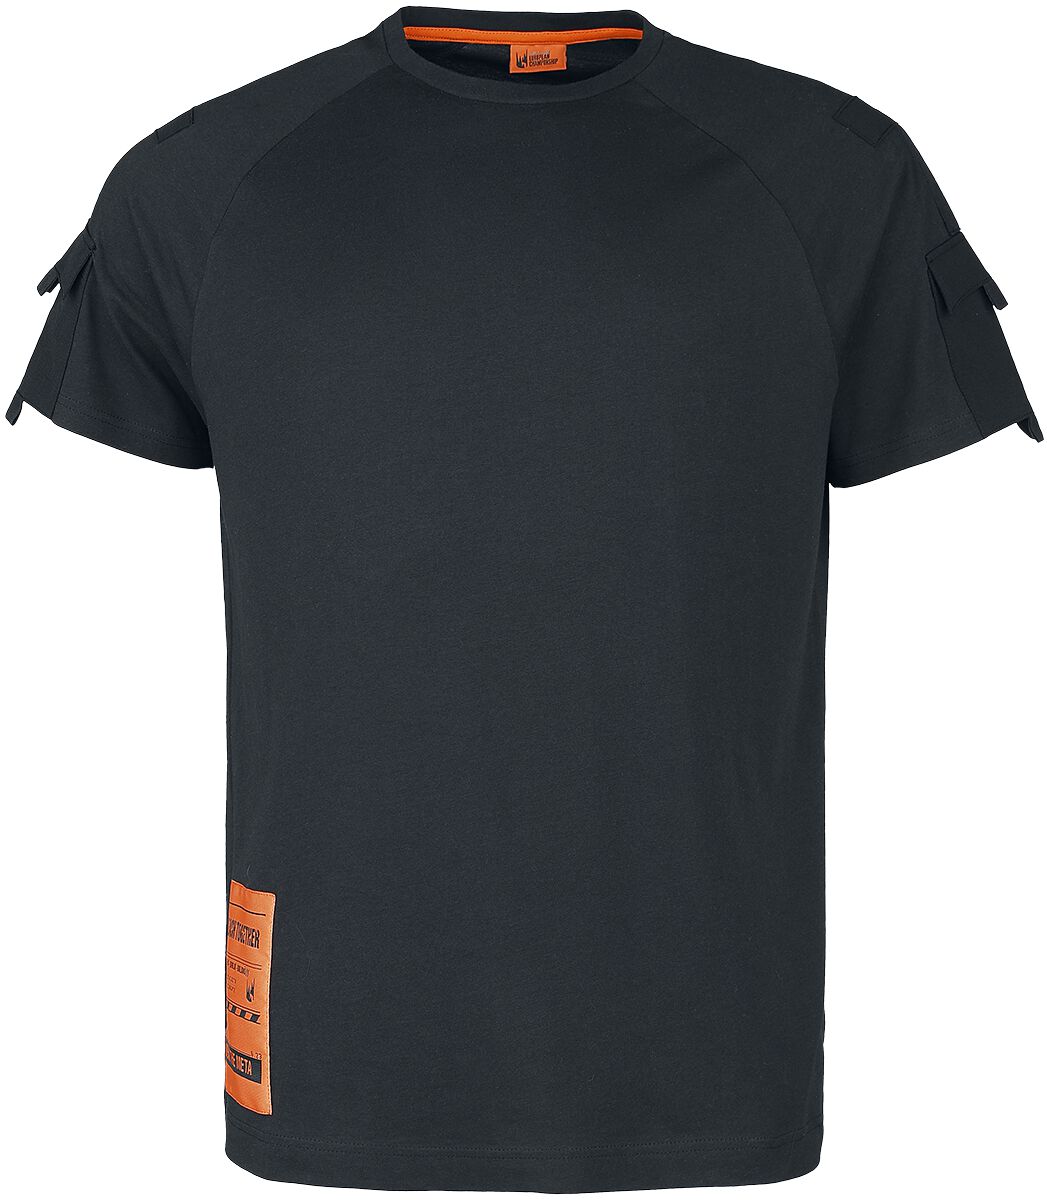 lec - gaming t-shirt - break the meta - s bis l - fÃ¼r mÃ¤nner - grÃ¶ÃŸe l - - emp exklusives merchandise! schwarz/orange